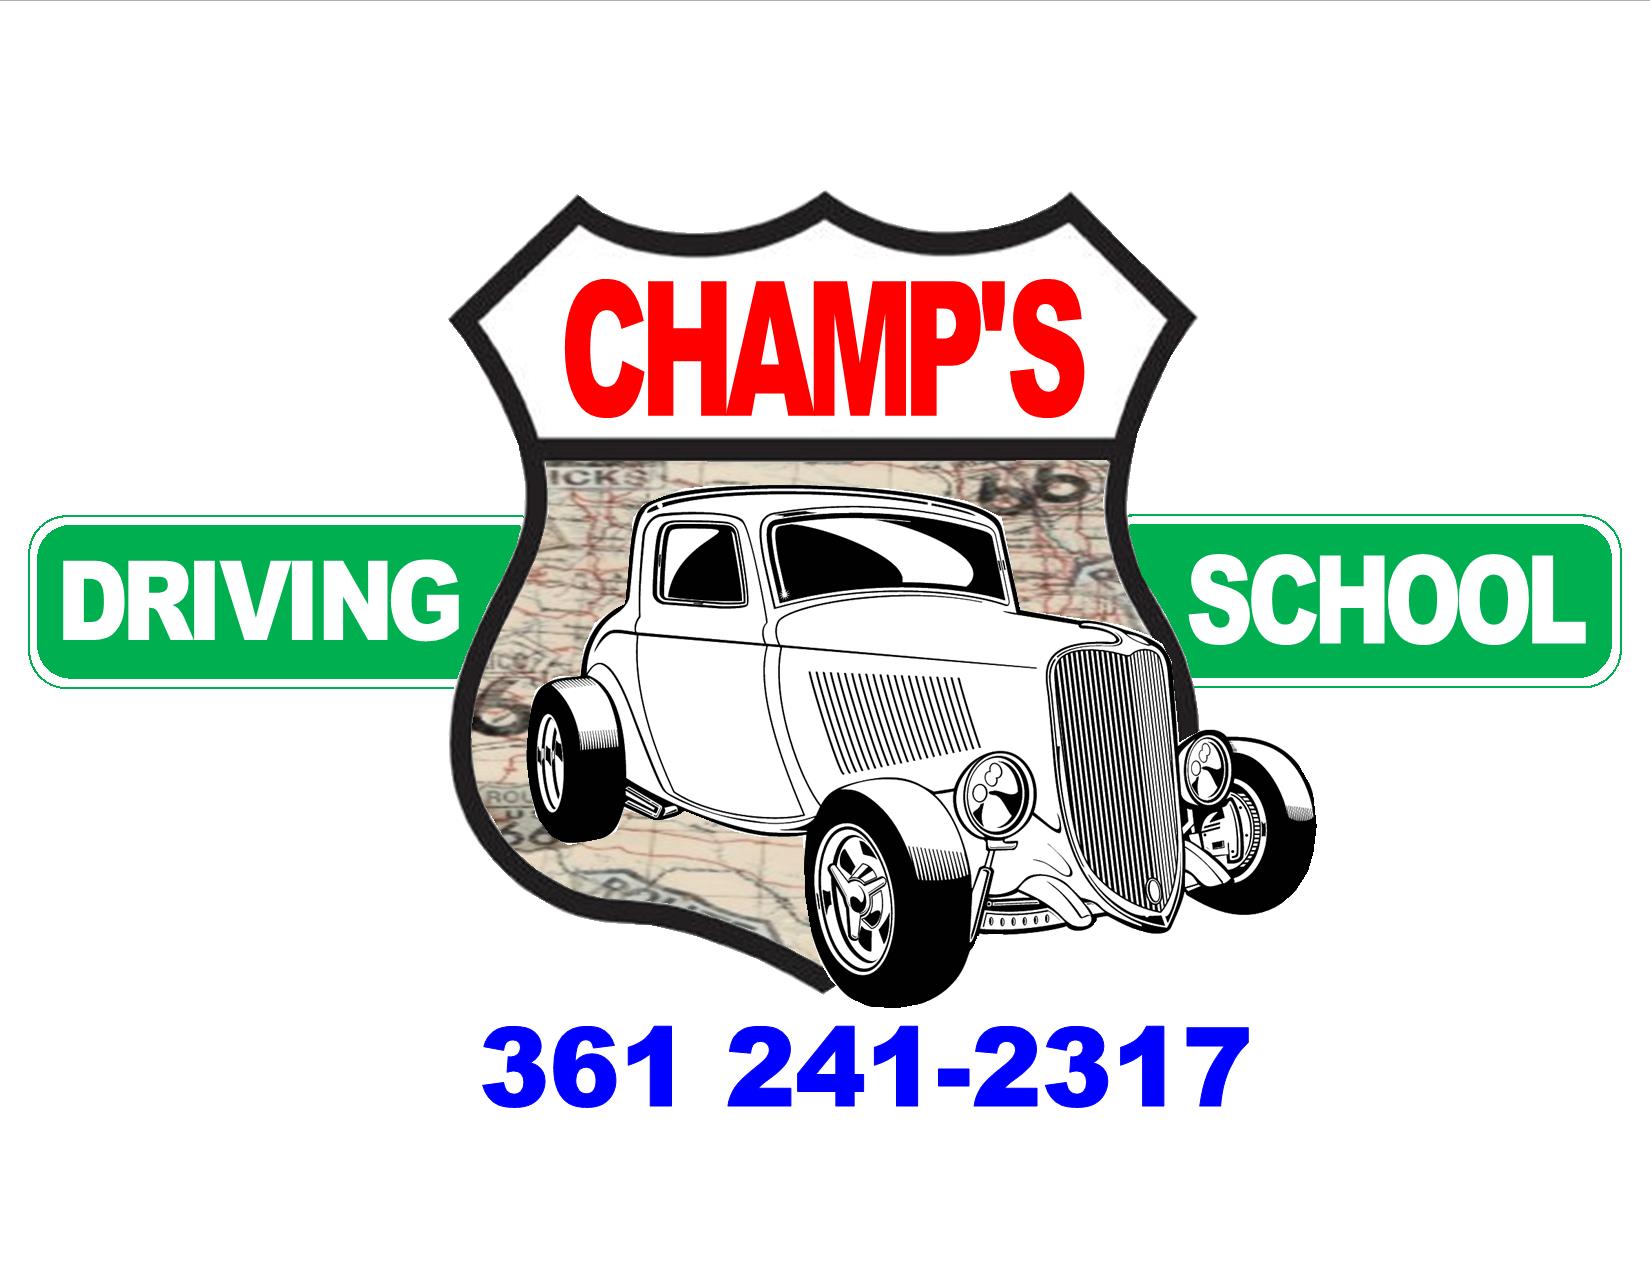 CHAMP'S DRIVING SCHOOL